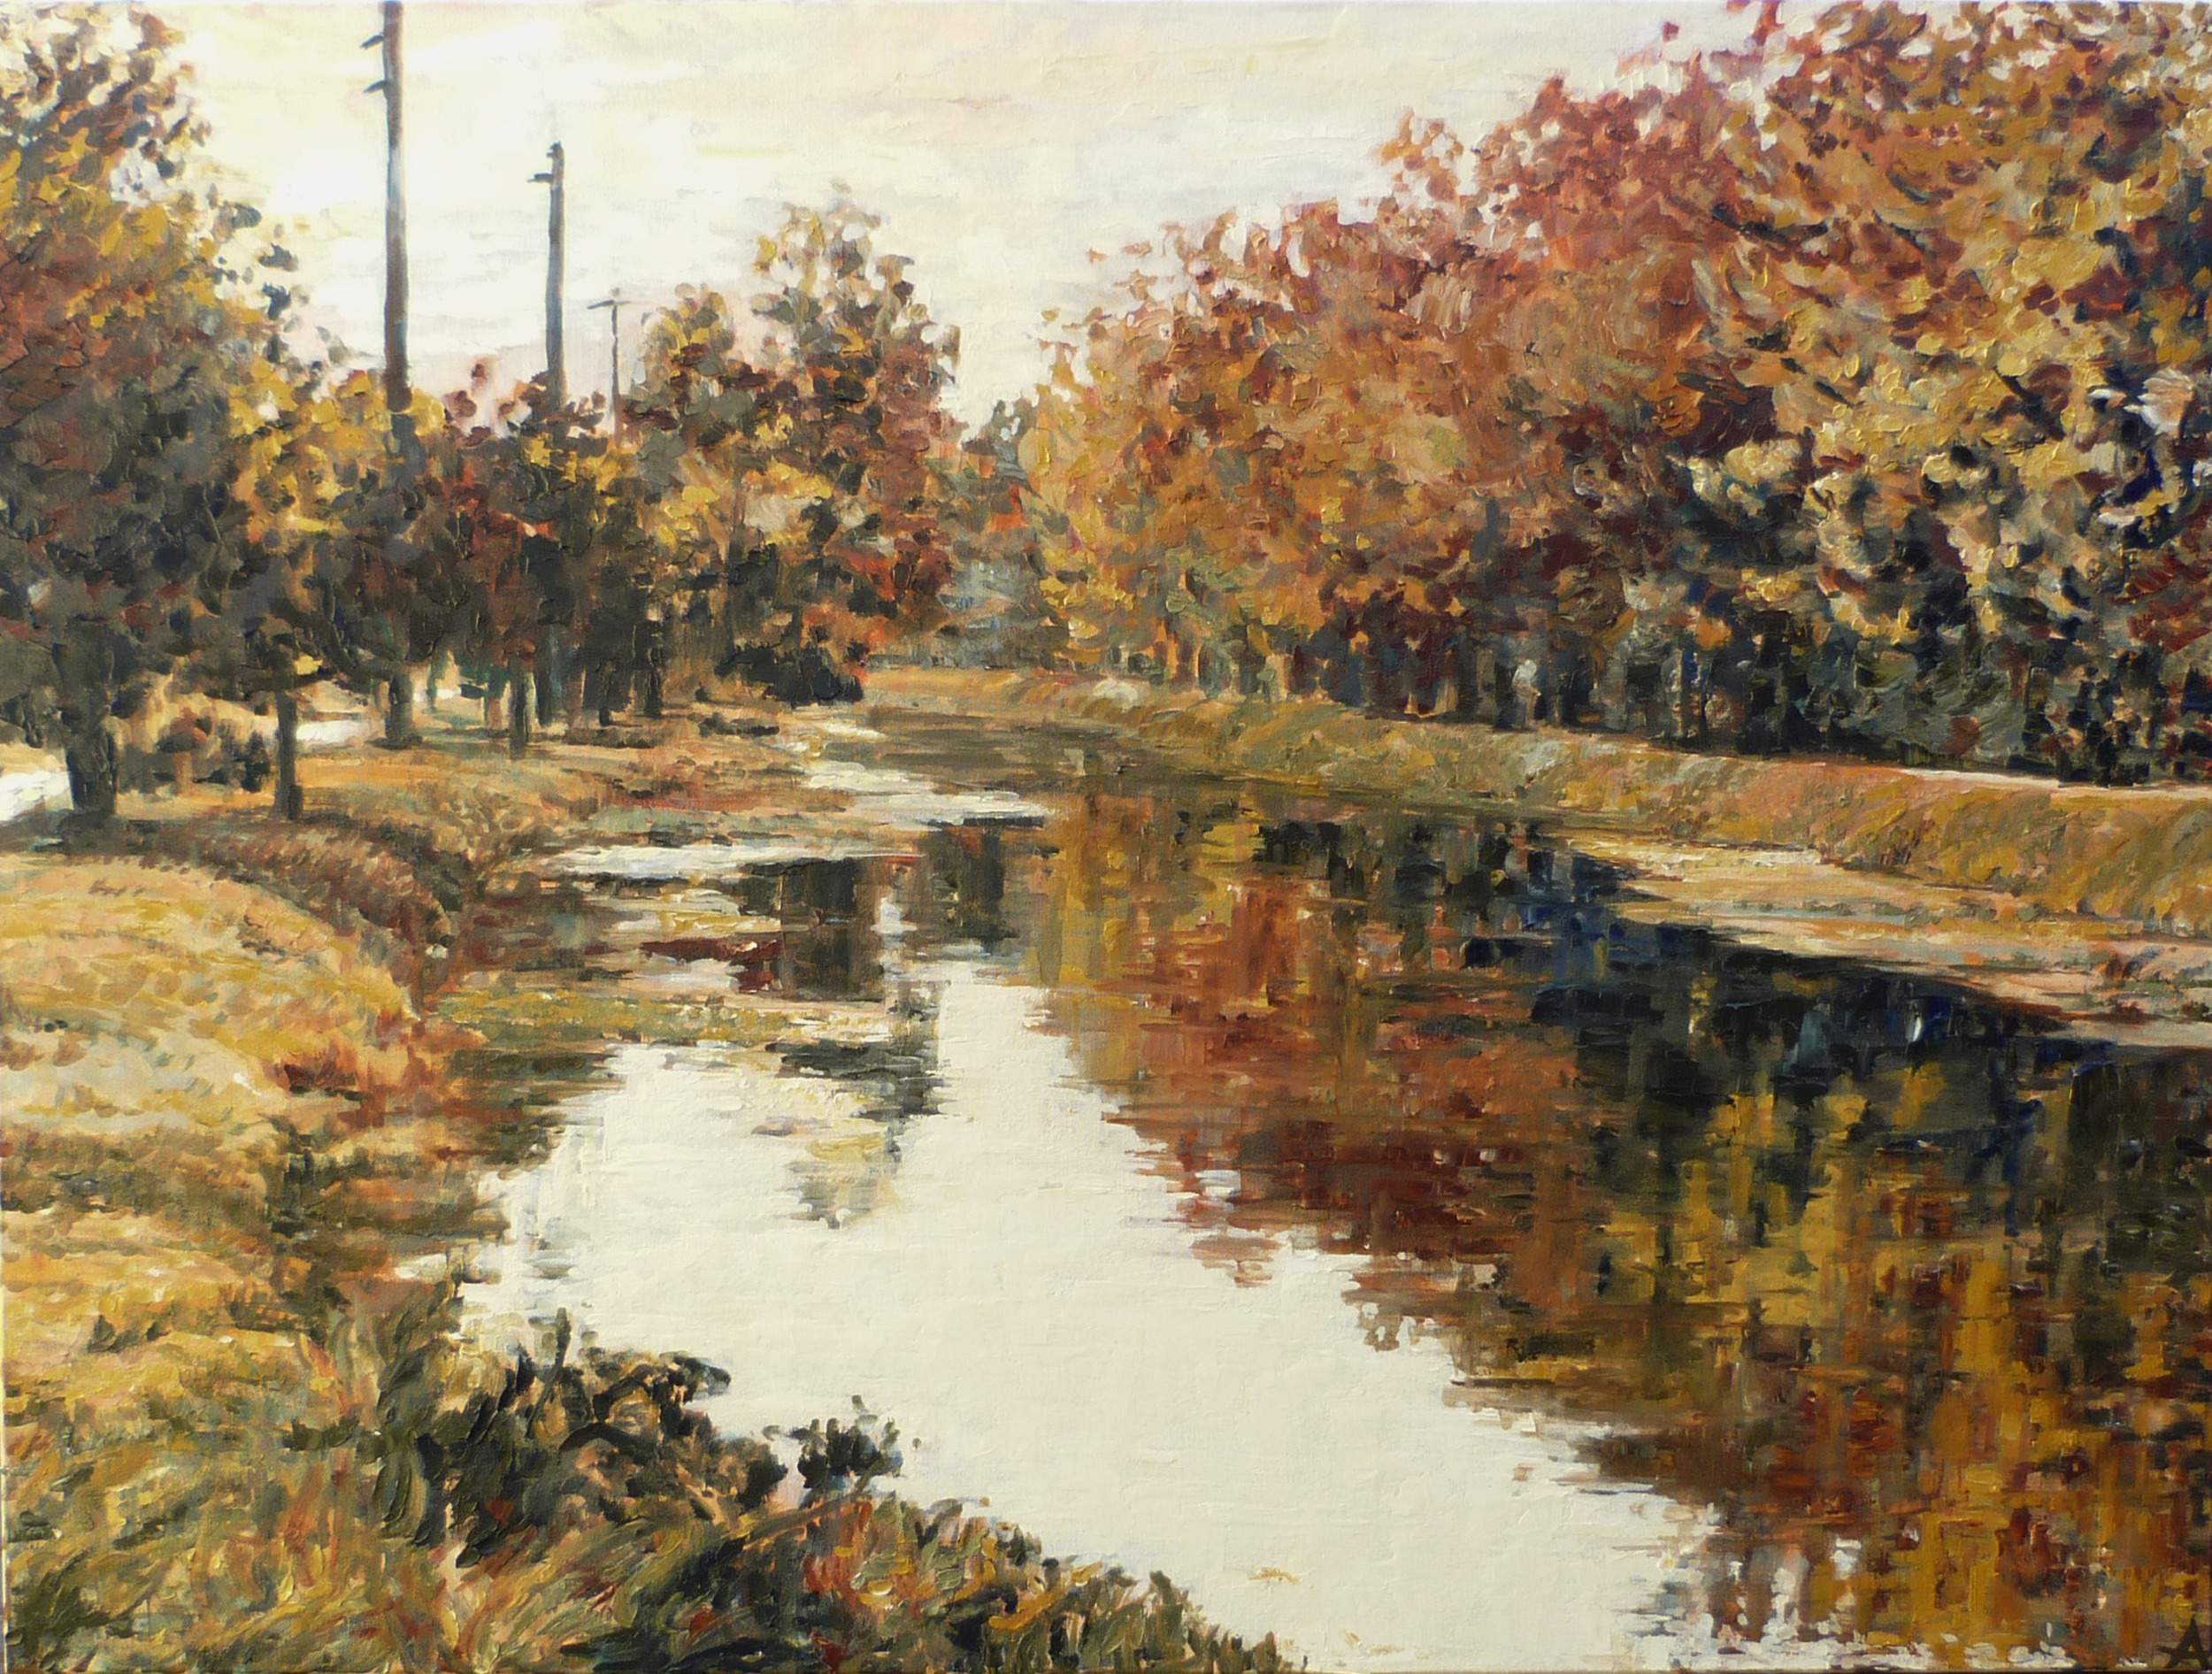 SOLD, Autumn in Indianapolis, Copyright 2013 Hirschten, Oil on Canvas, 30" x 40"